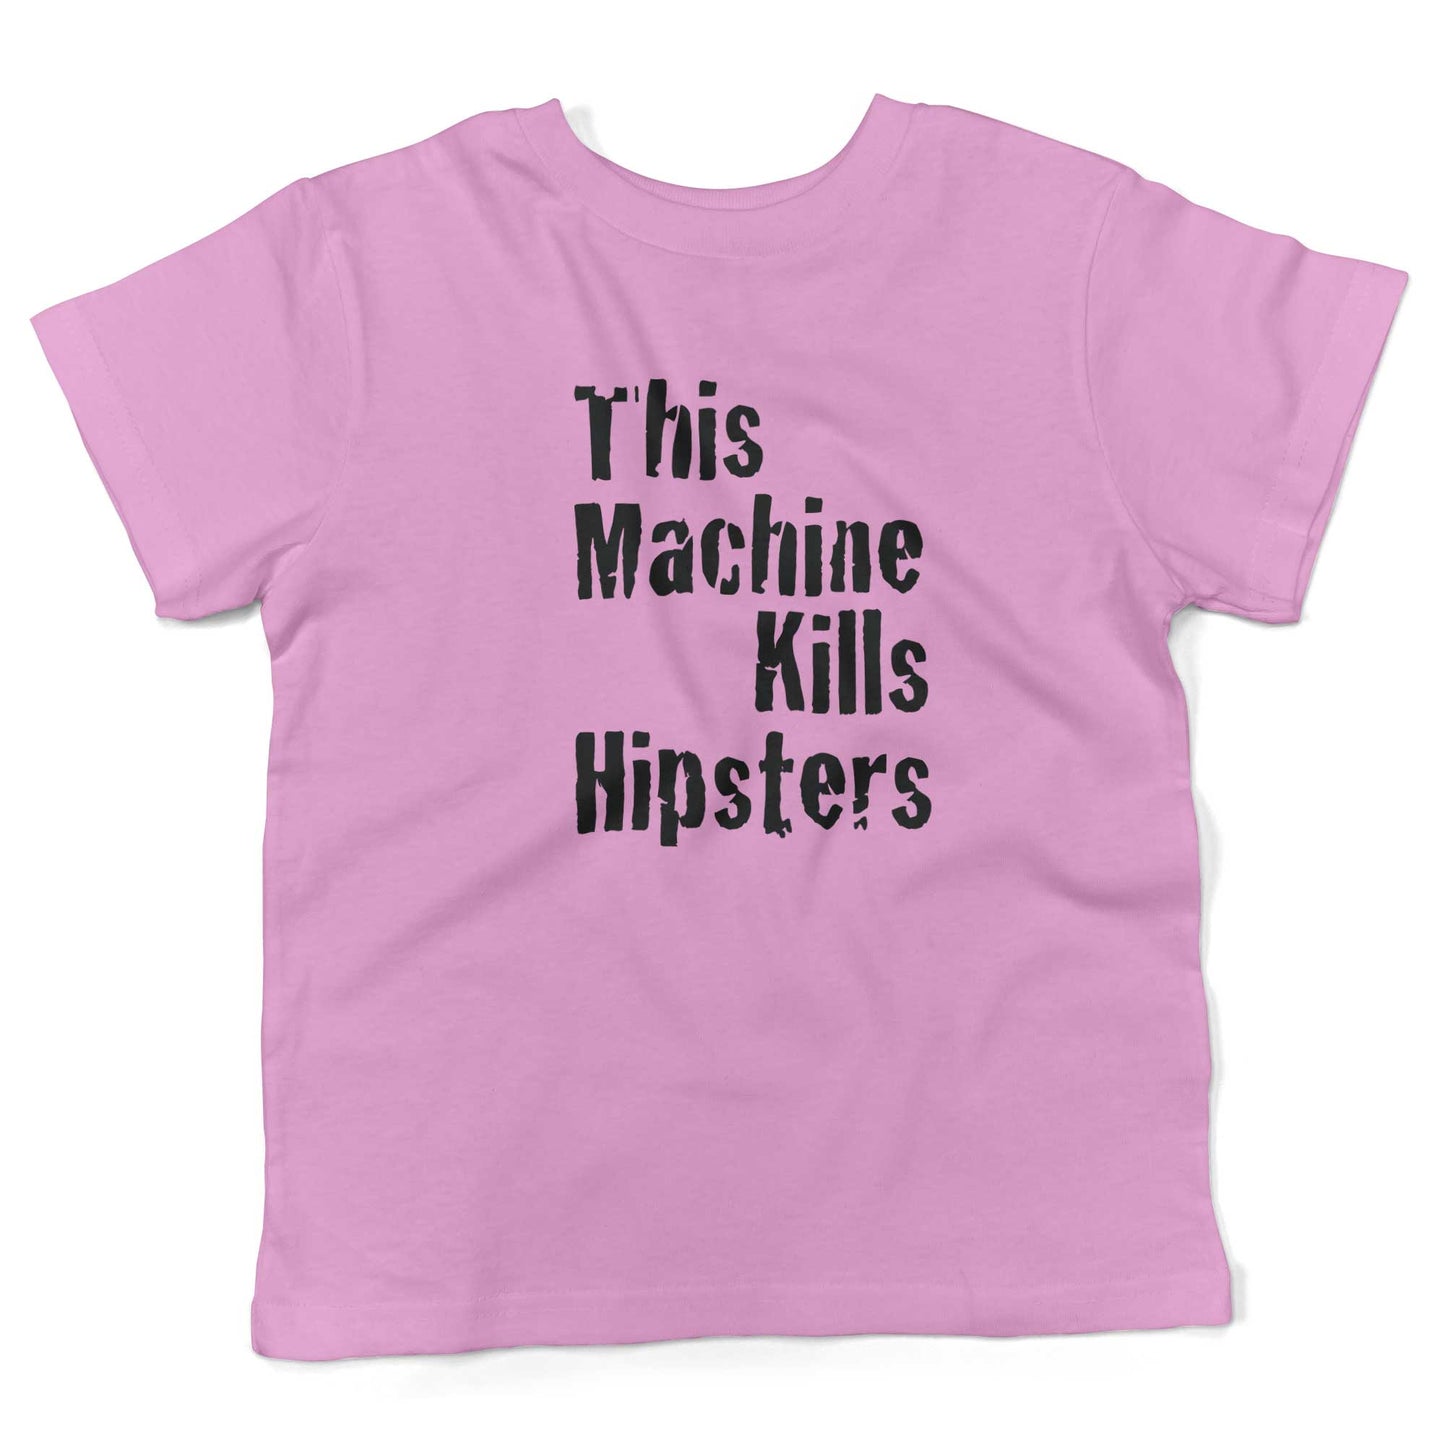 This Machine Kills Hipsters Toddler Shirt-Organic Pink-2T